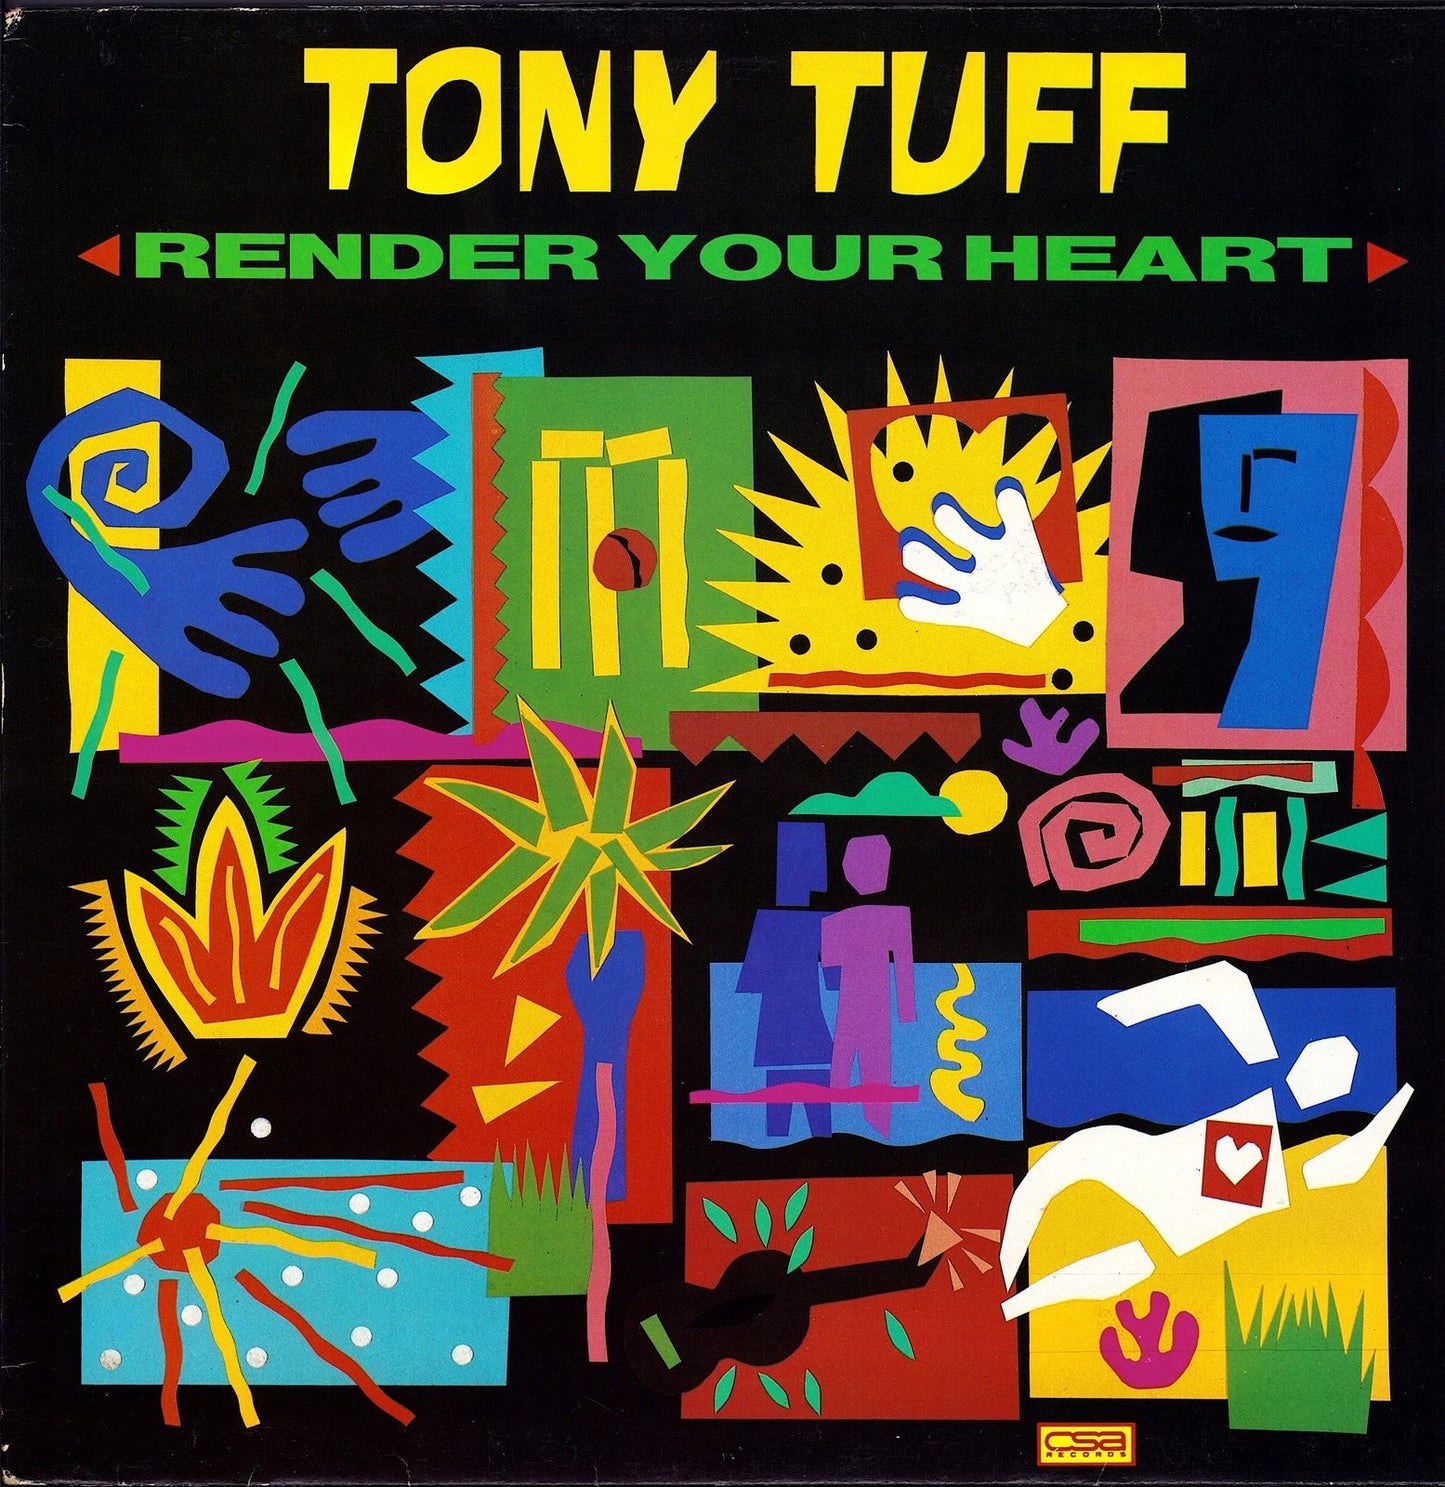 Tony Tuff - Render Your Heart Vinyl LP